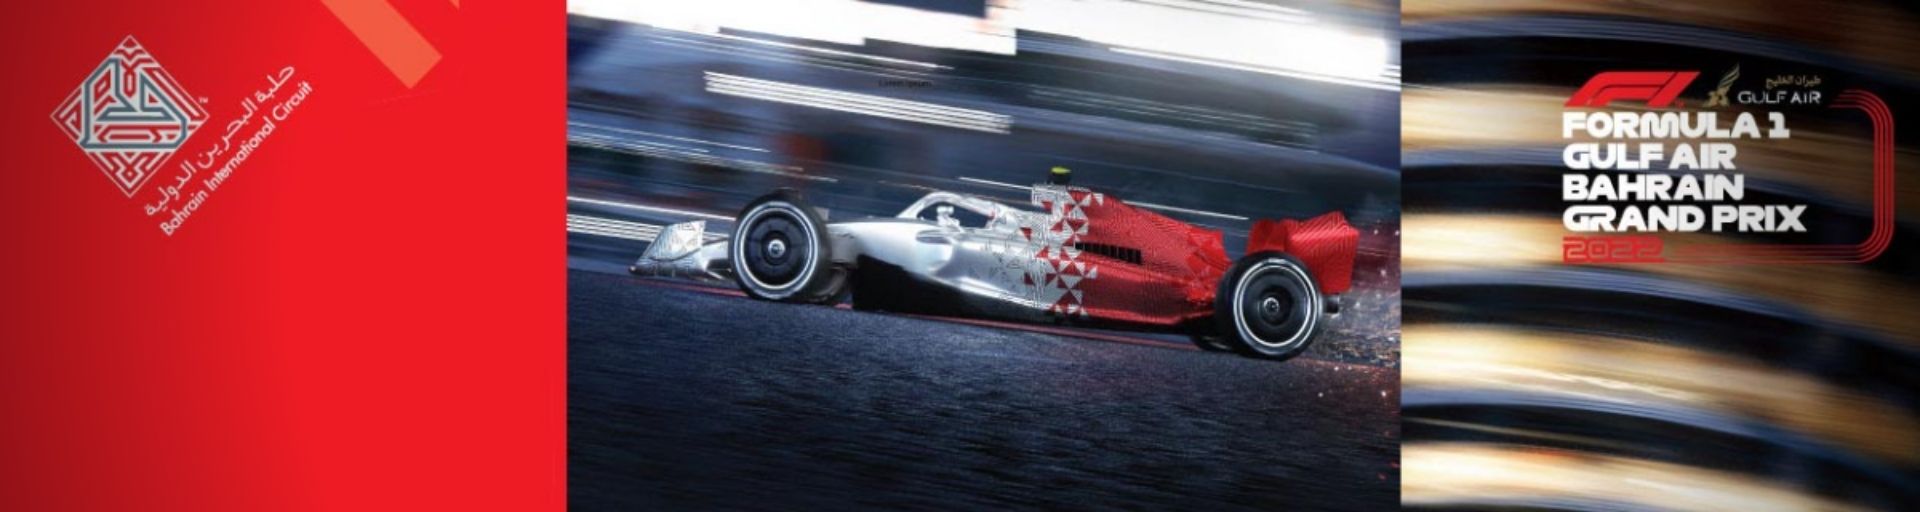 Гран-при Бахрейна 2022